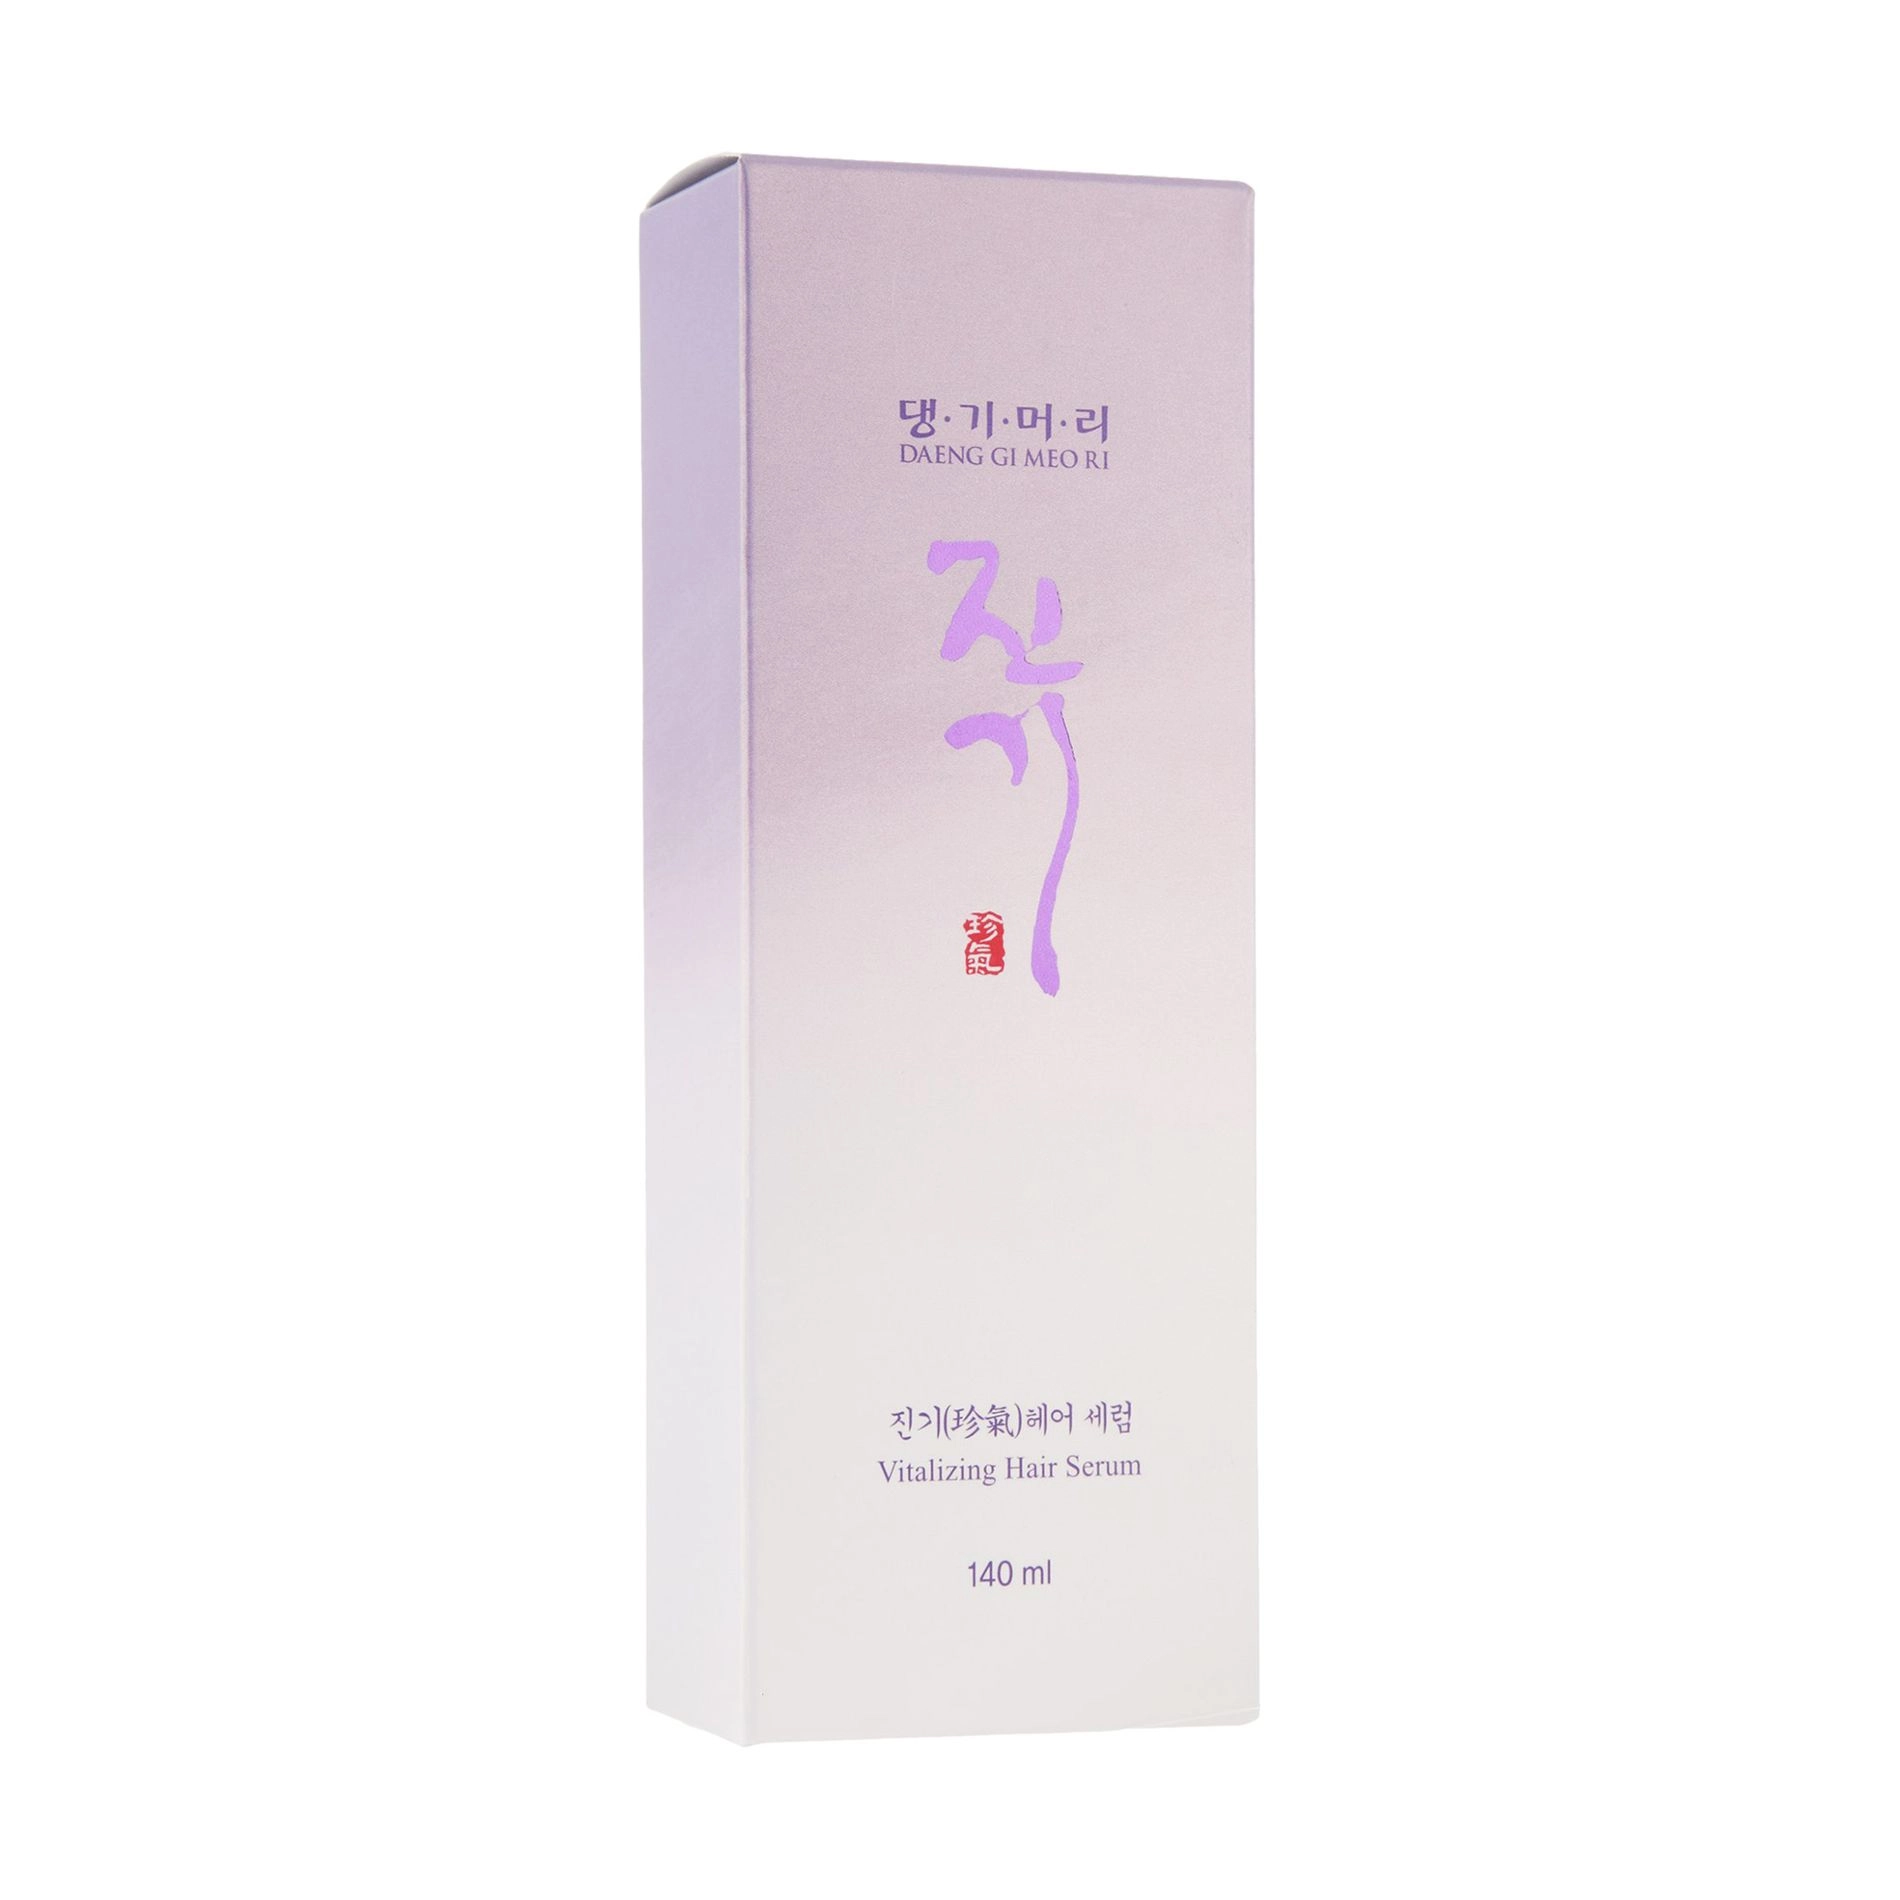 Восстанавливающая сыворотка для волос - Daeng Gi Meo Ri Vitalizing Hair Serum, 140 мл - фото N4